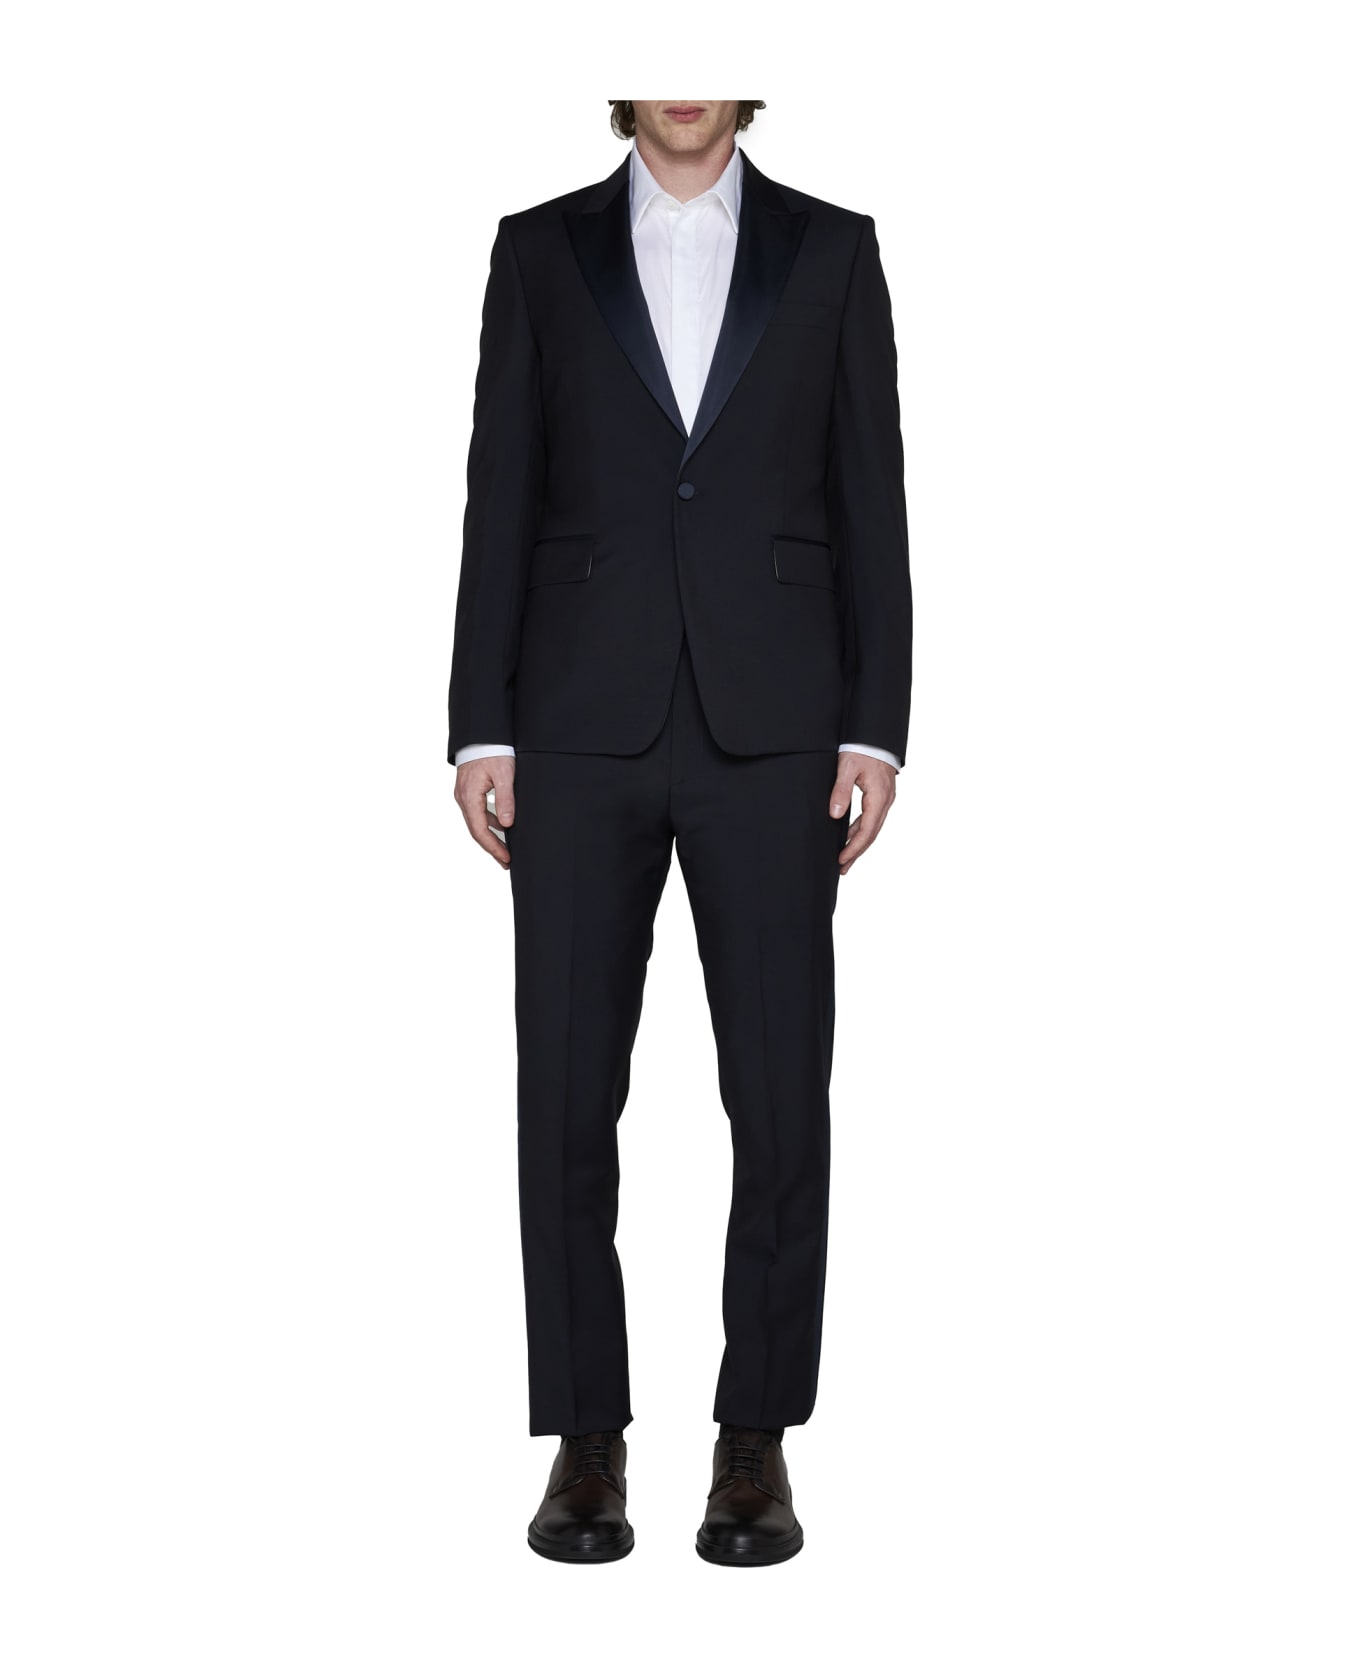 Paul Smith Suit - Dk na スーツ